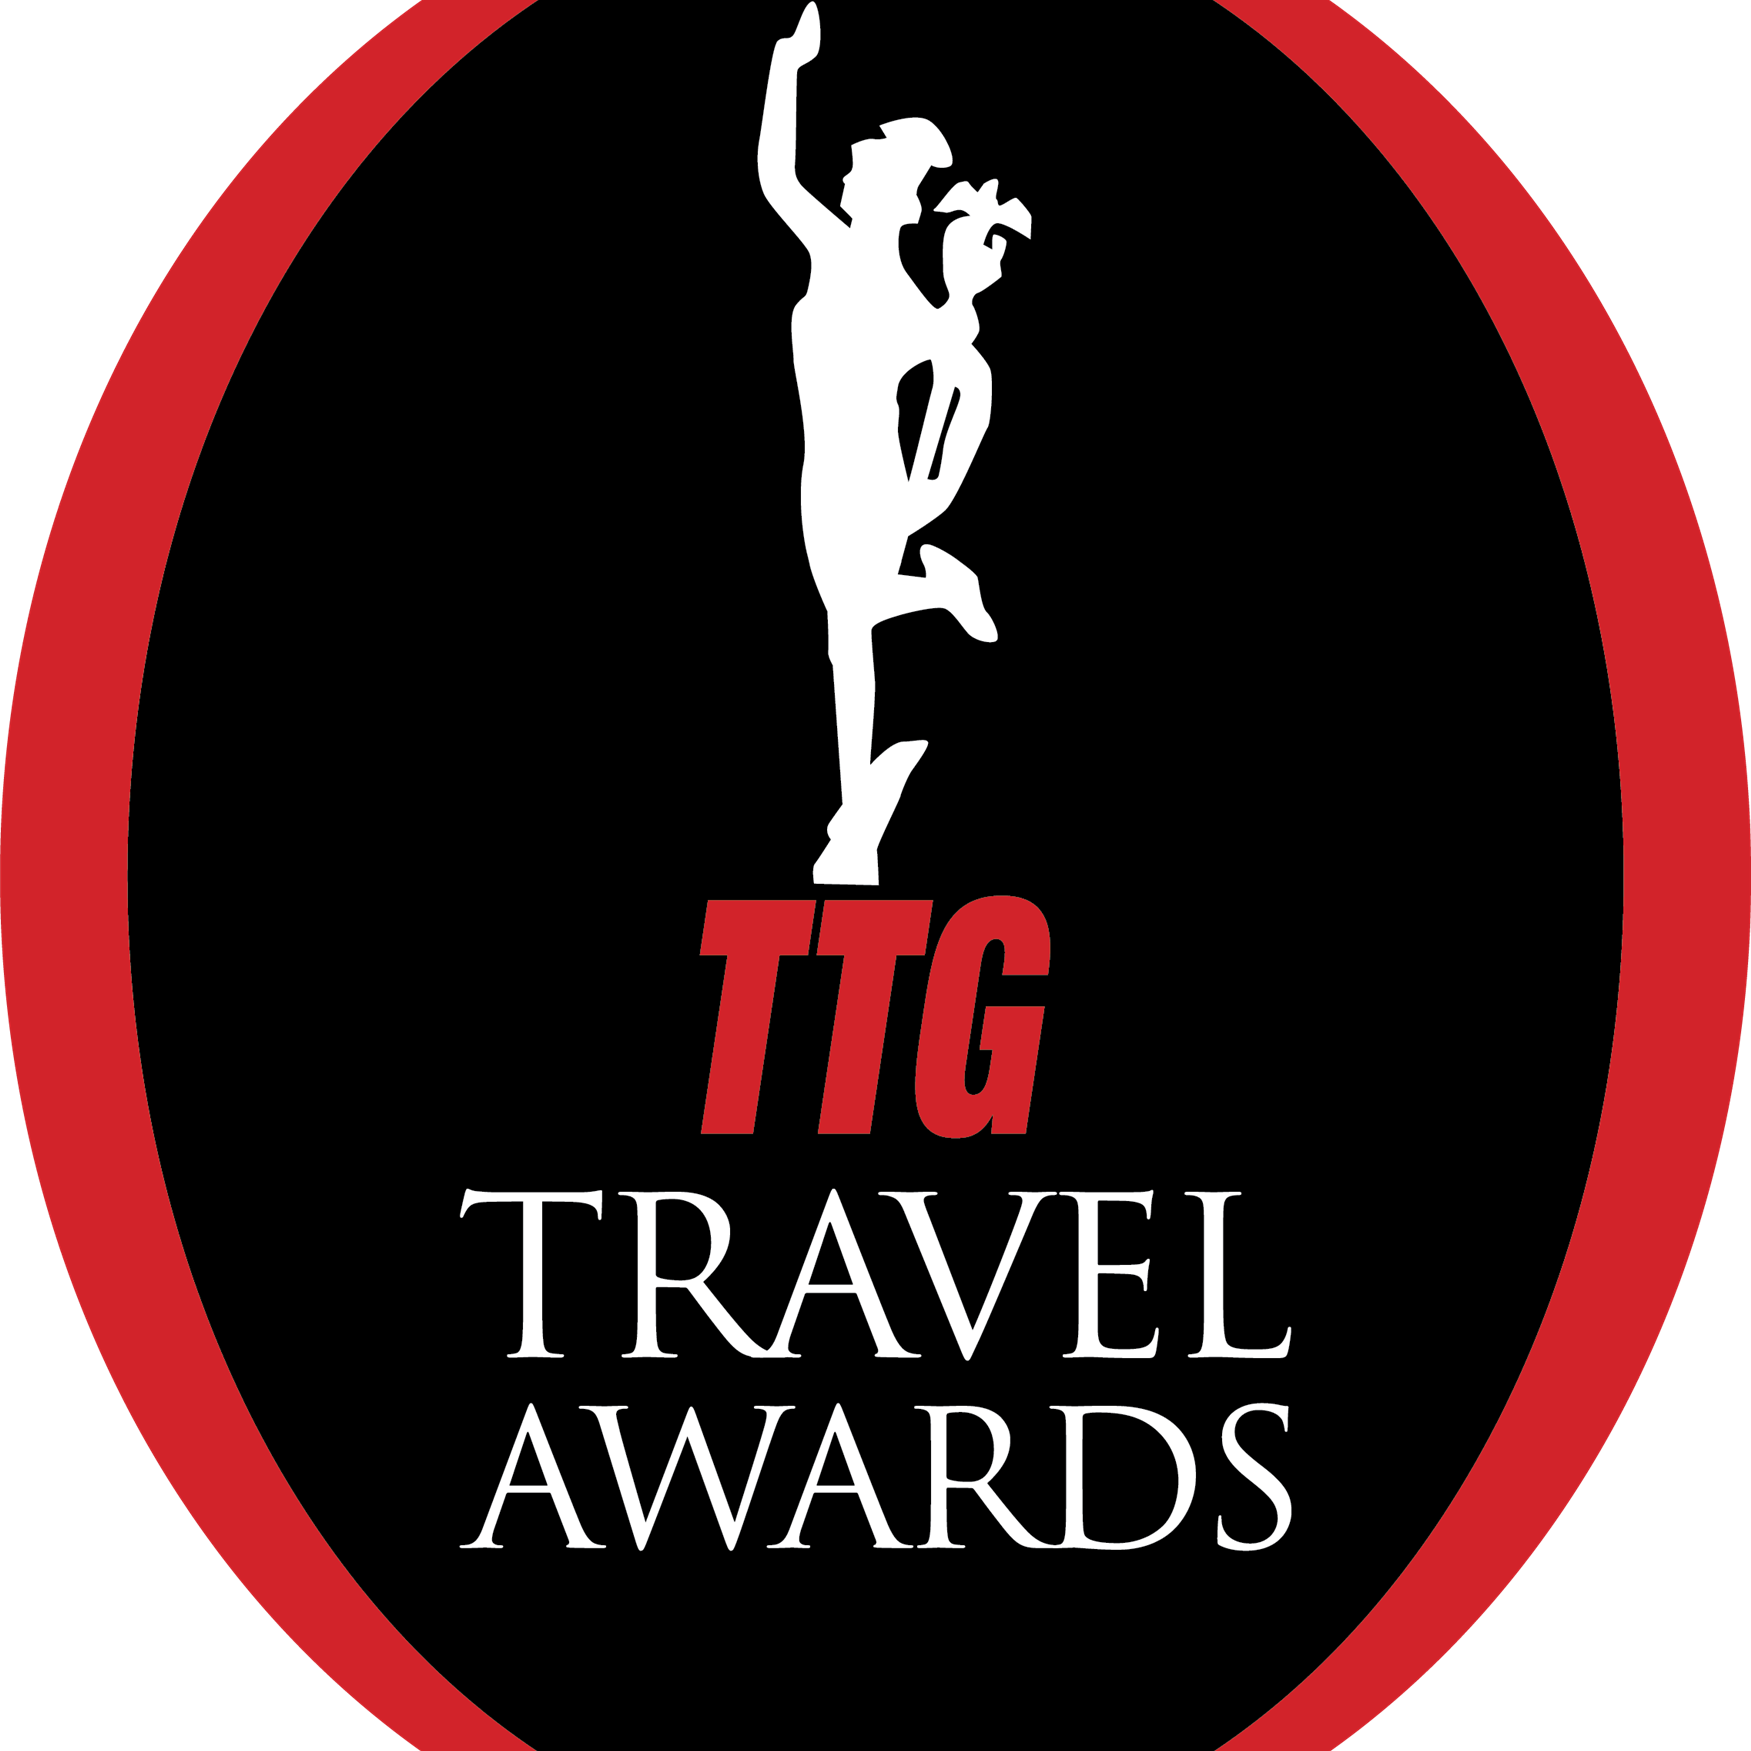 ttg-travel-award-logo